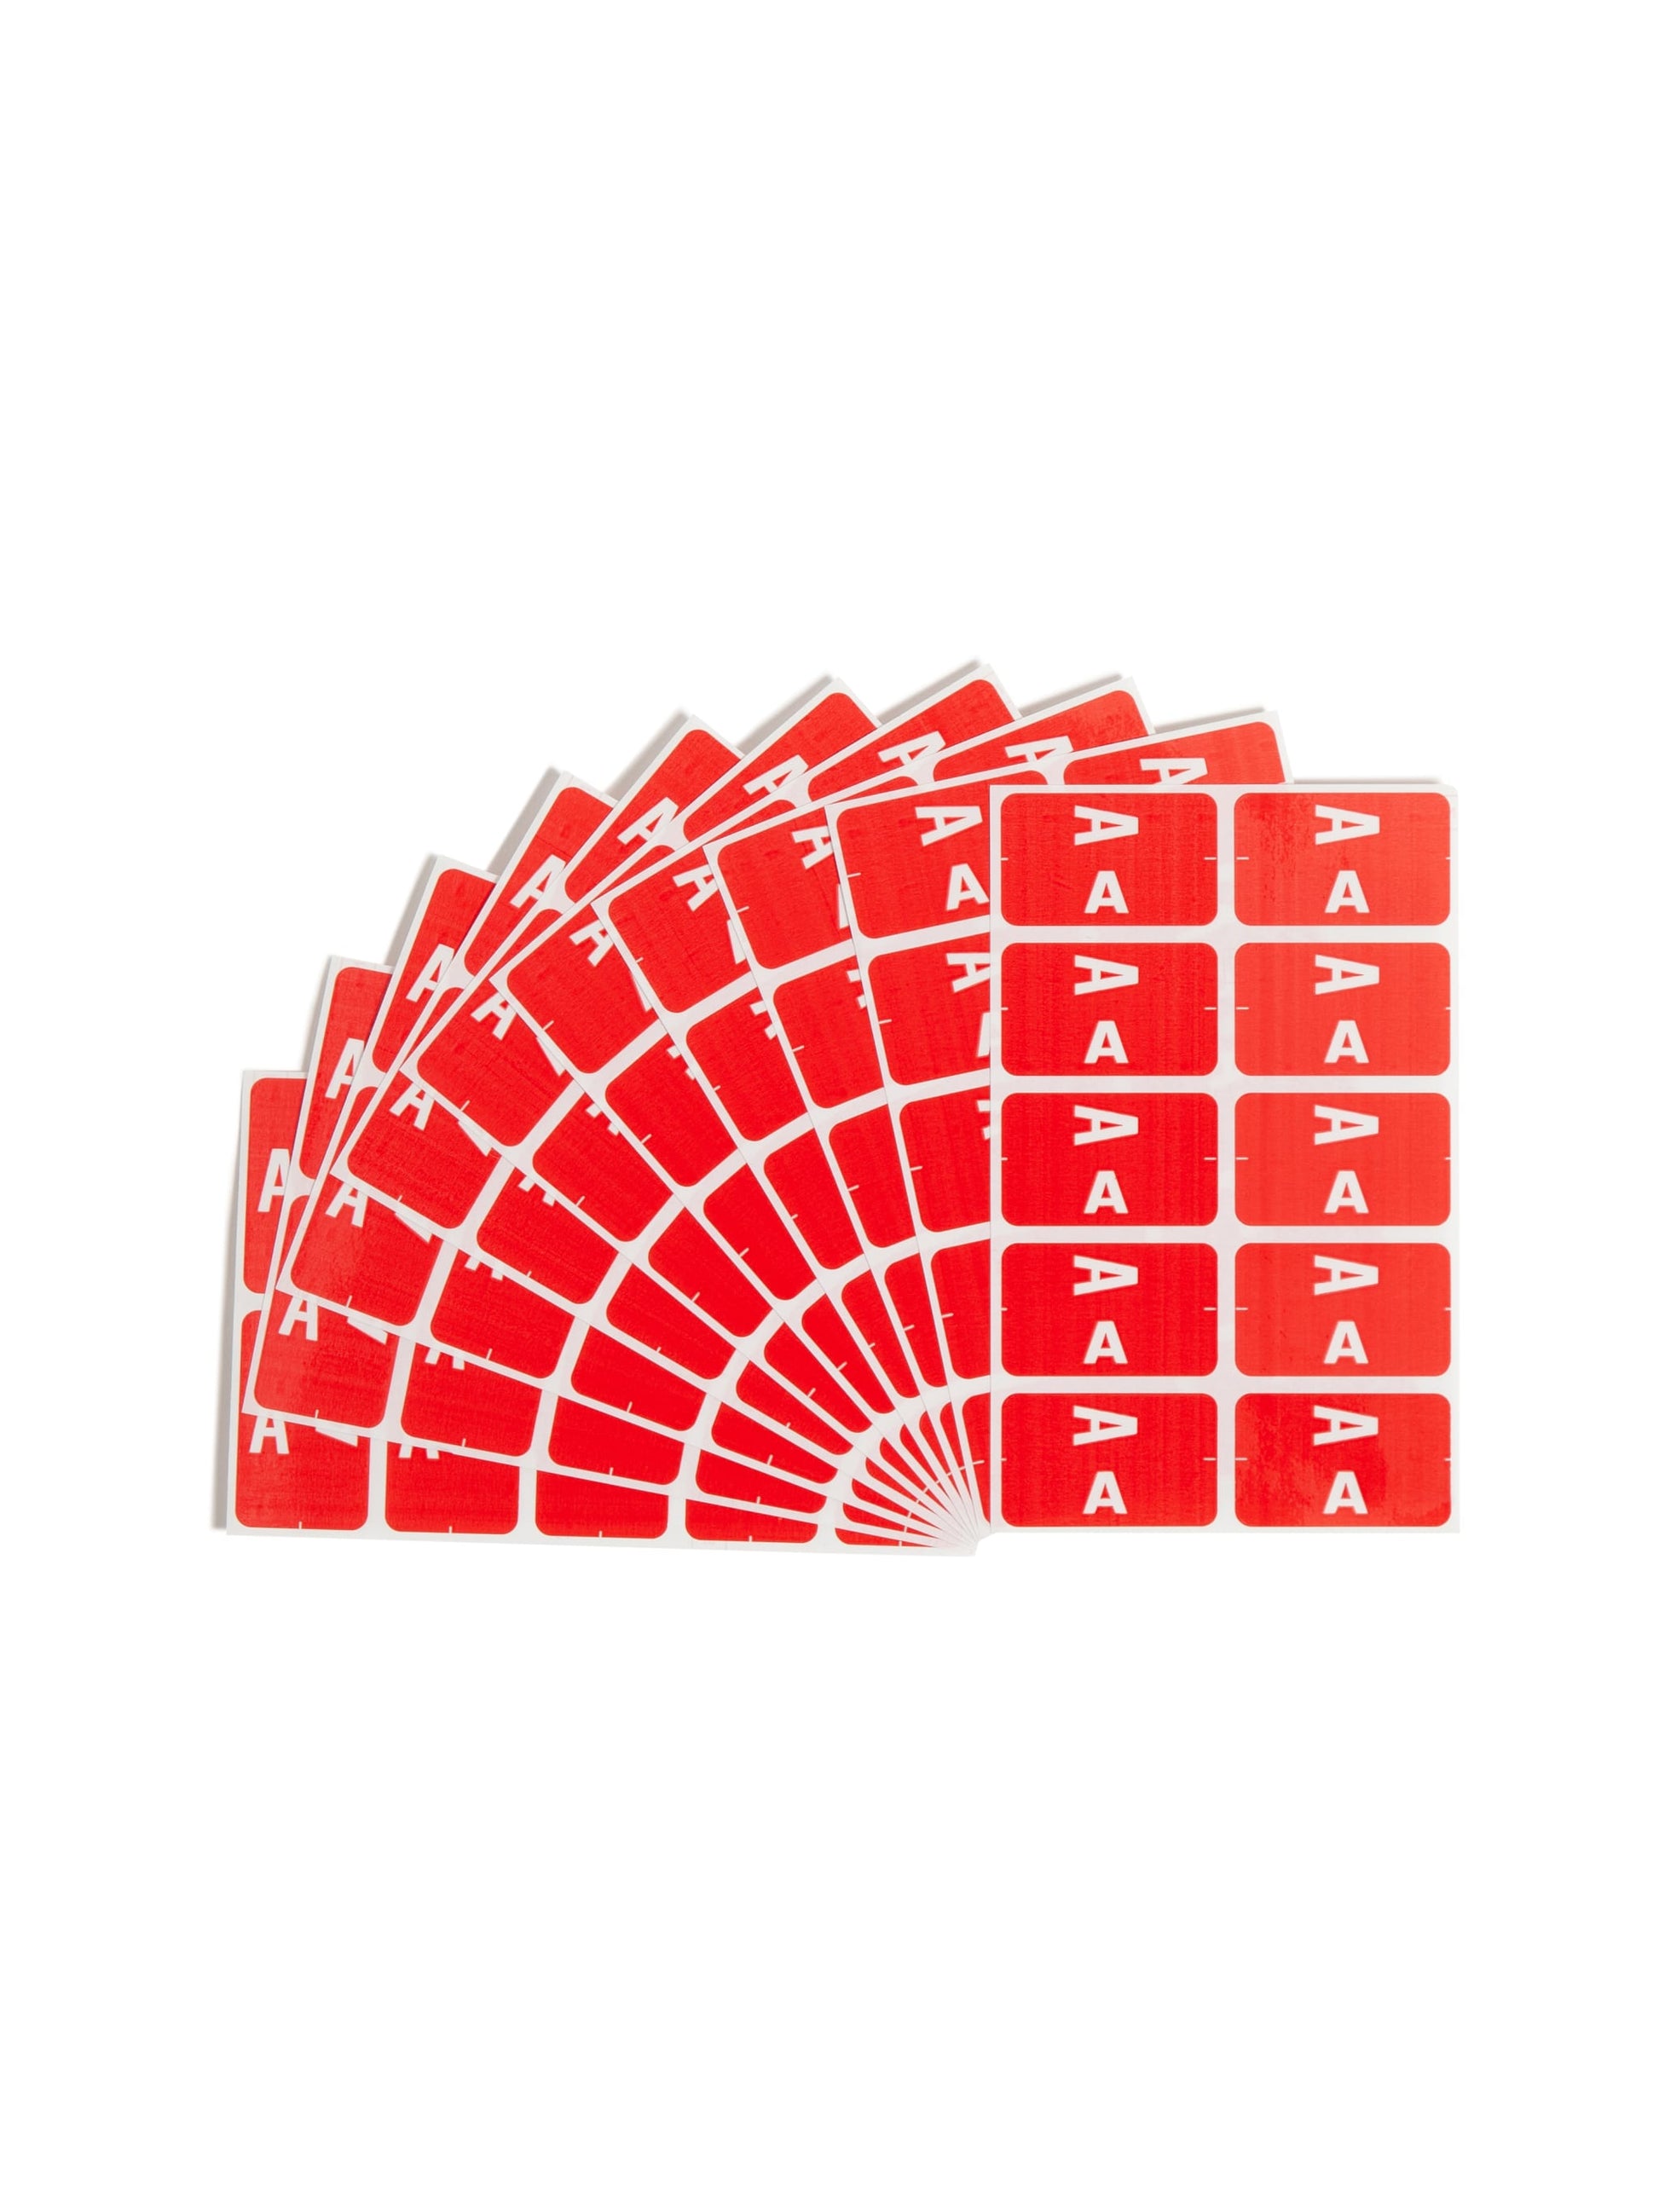 AlphaZ® ACCS Color Coded Alphabetic Labels - Sheets, Red Color, 1" X 1-5/8" Size, Set of 1, 086486671712